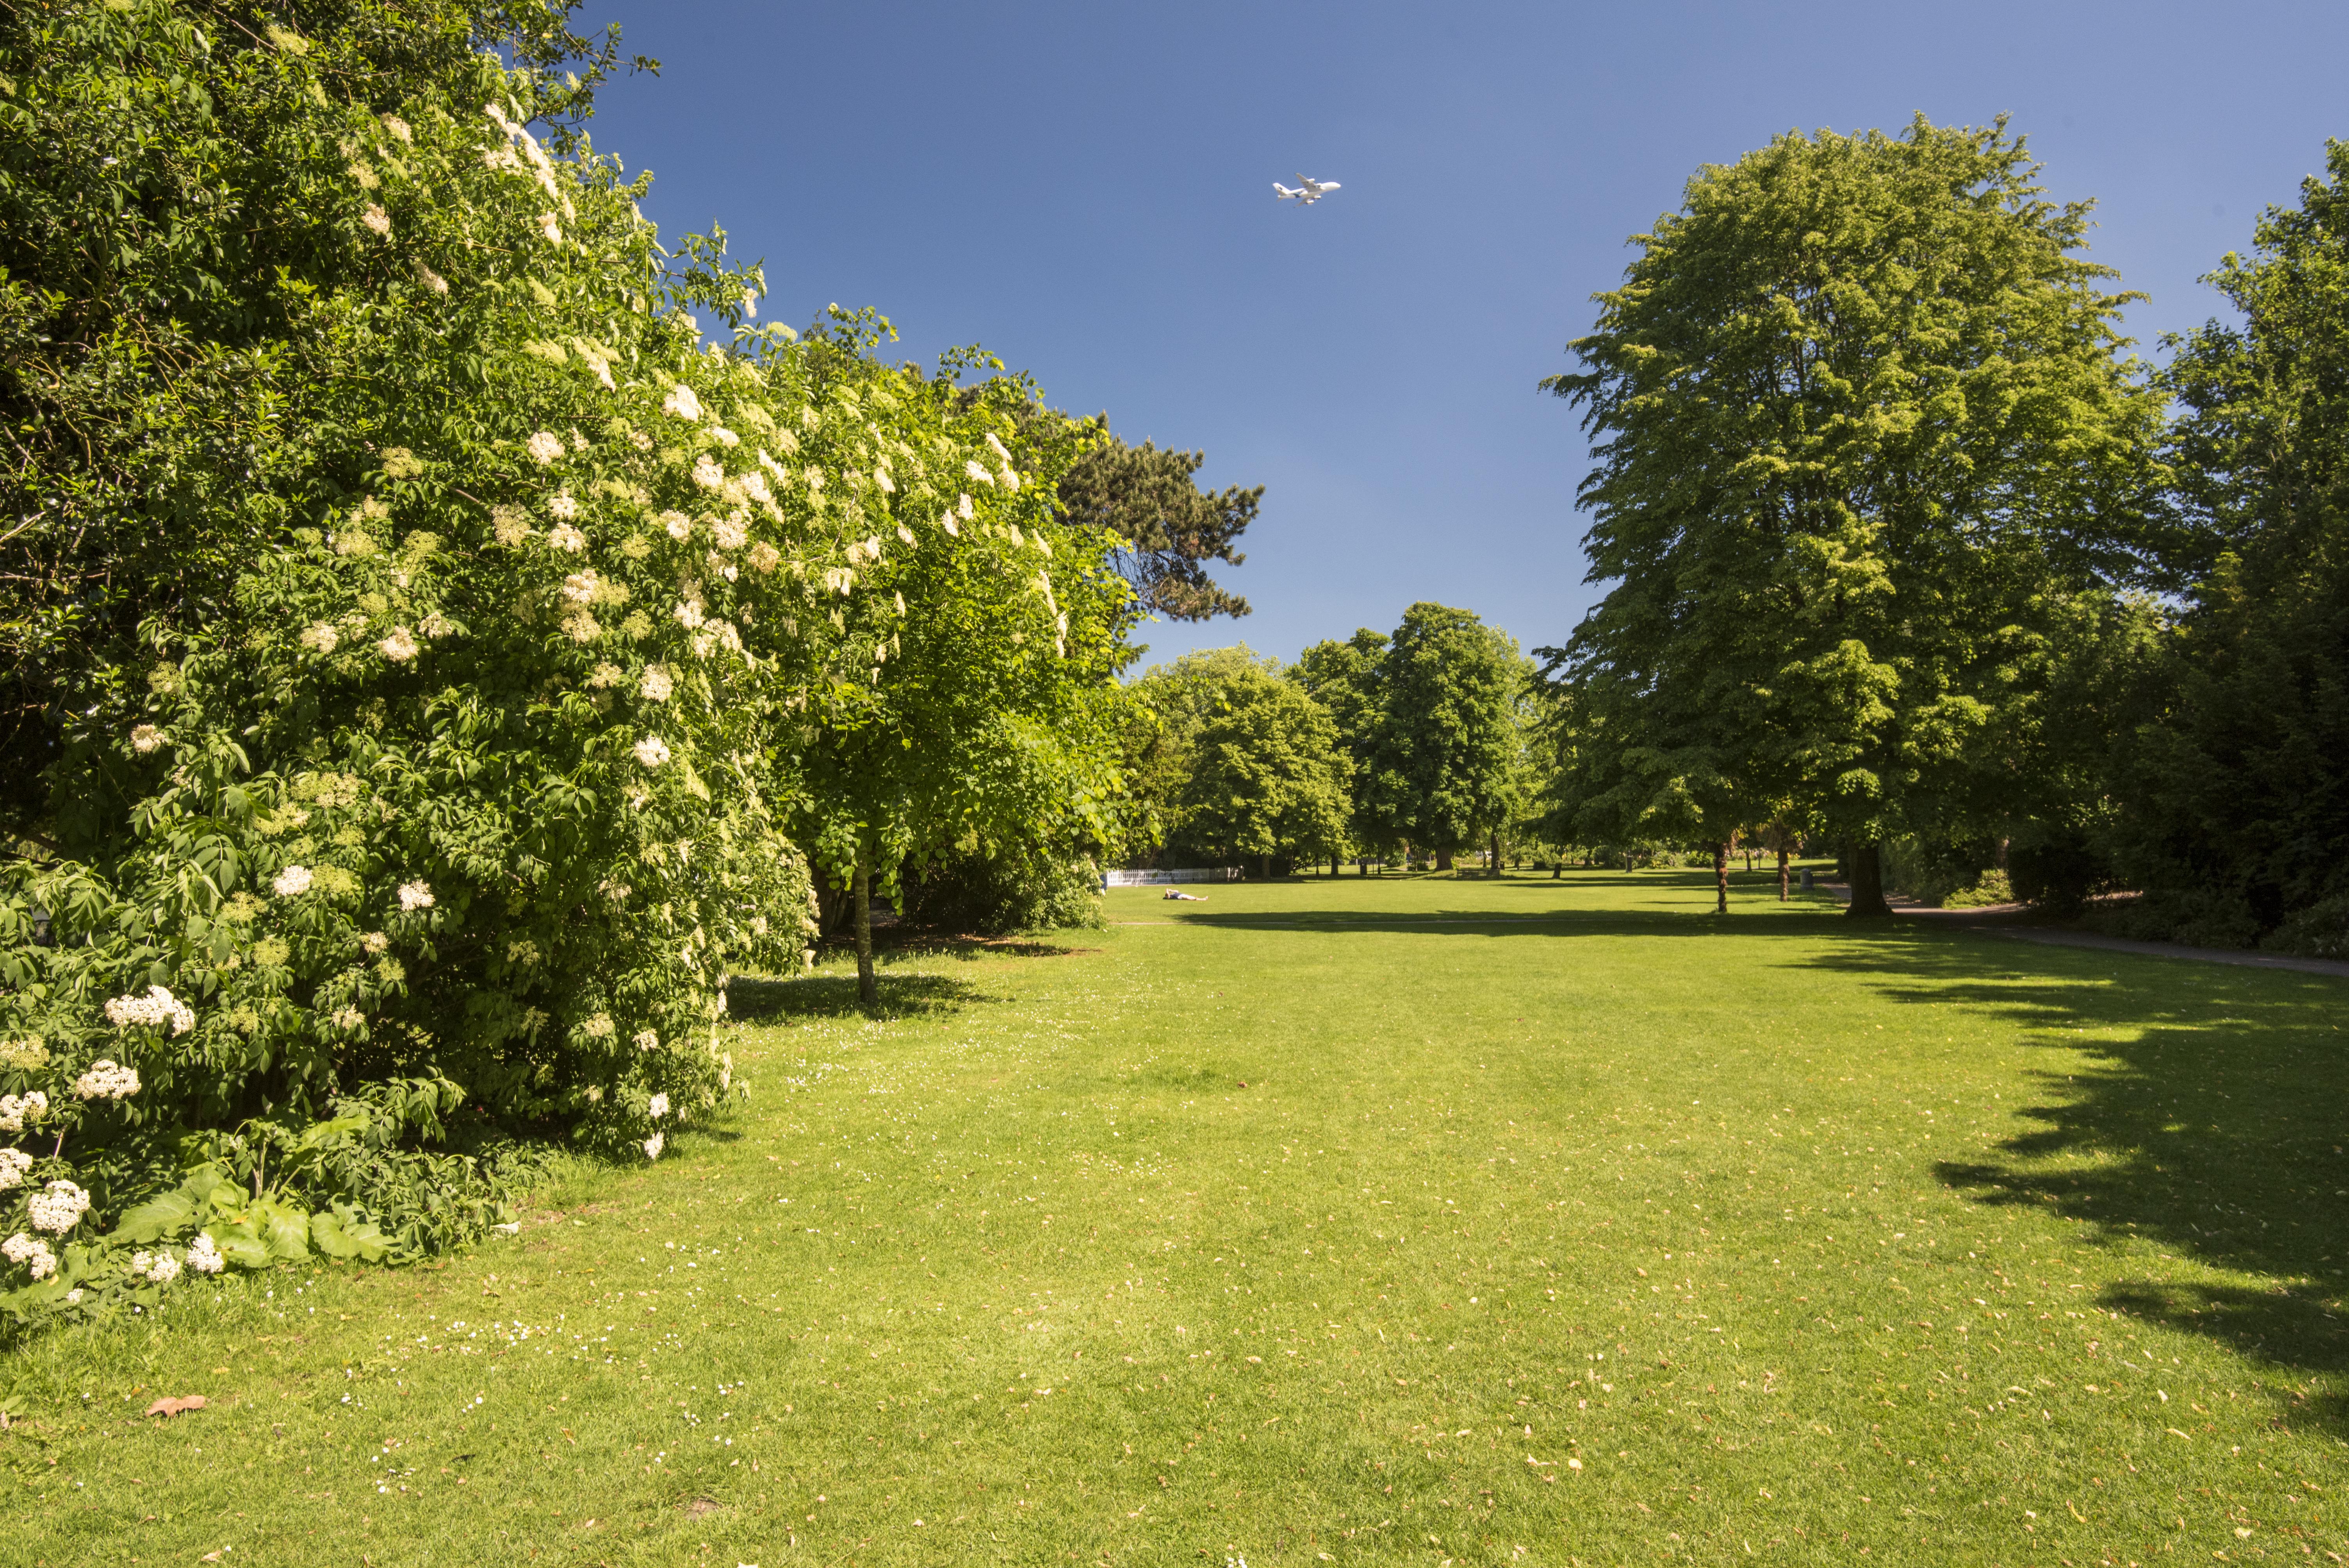 Canbury Park Gardens bursting with green colour